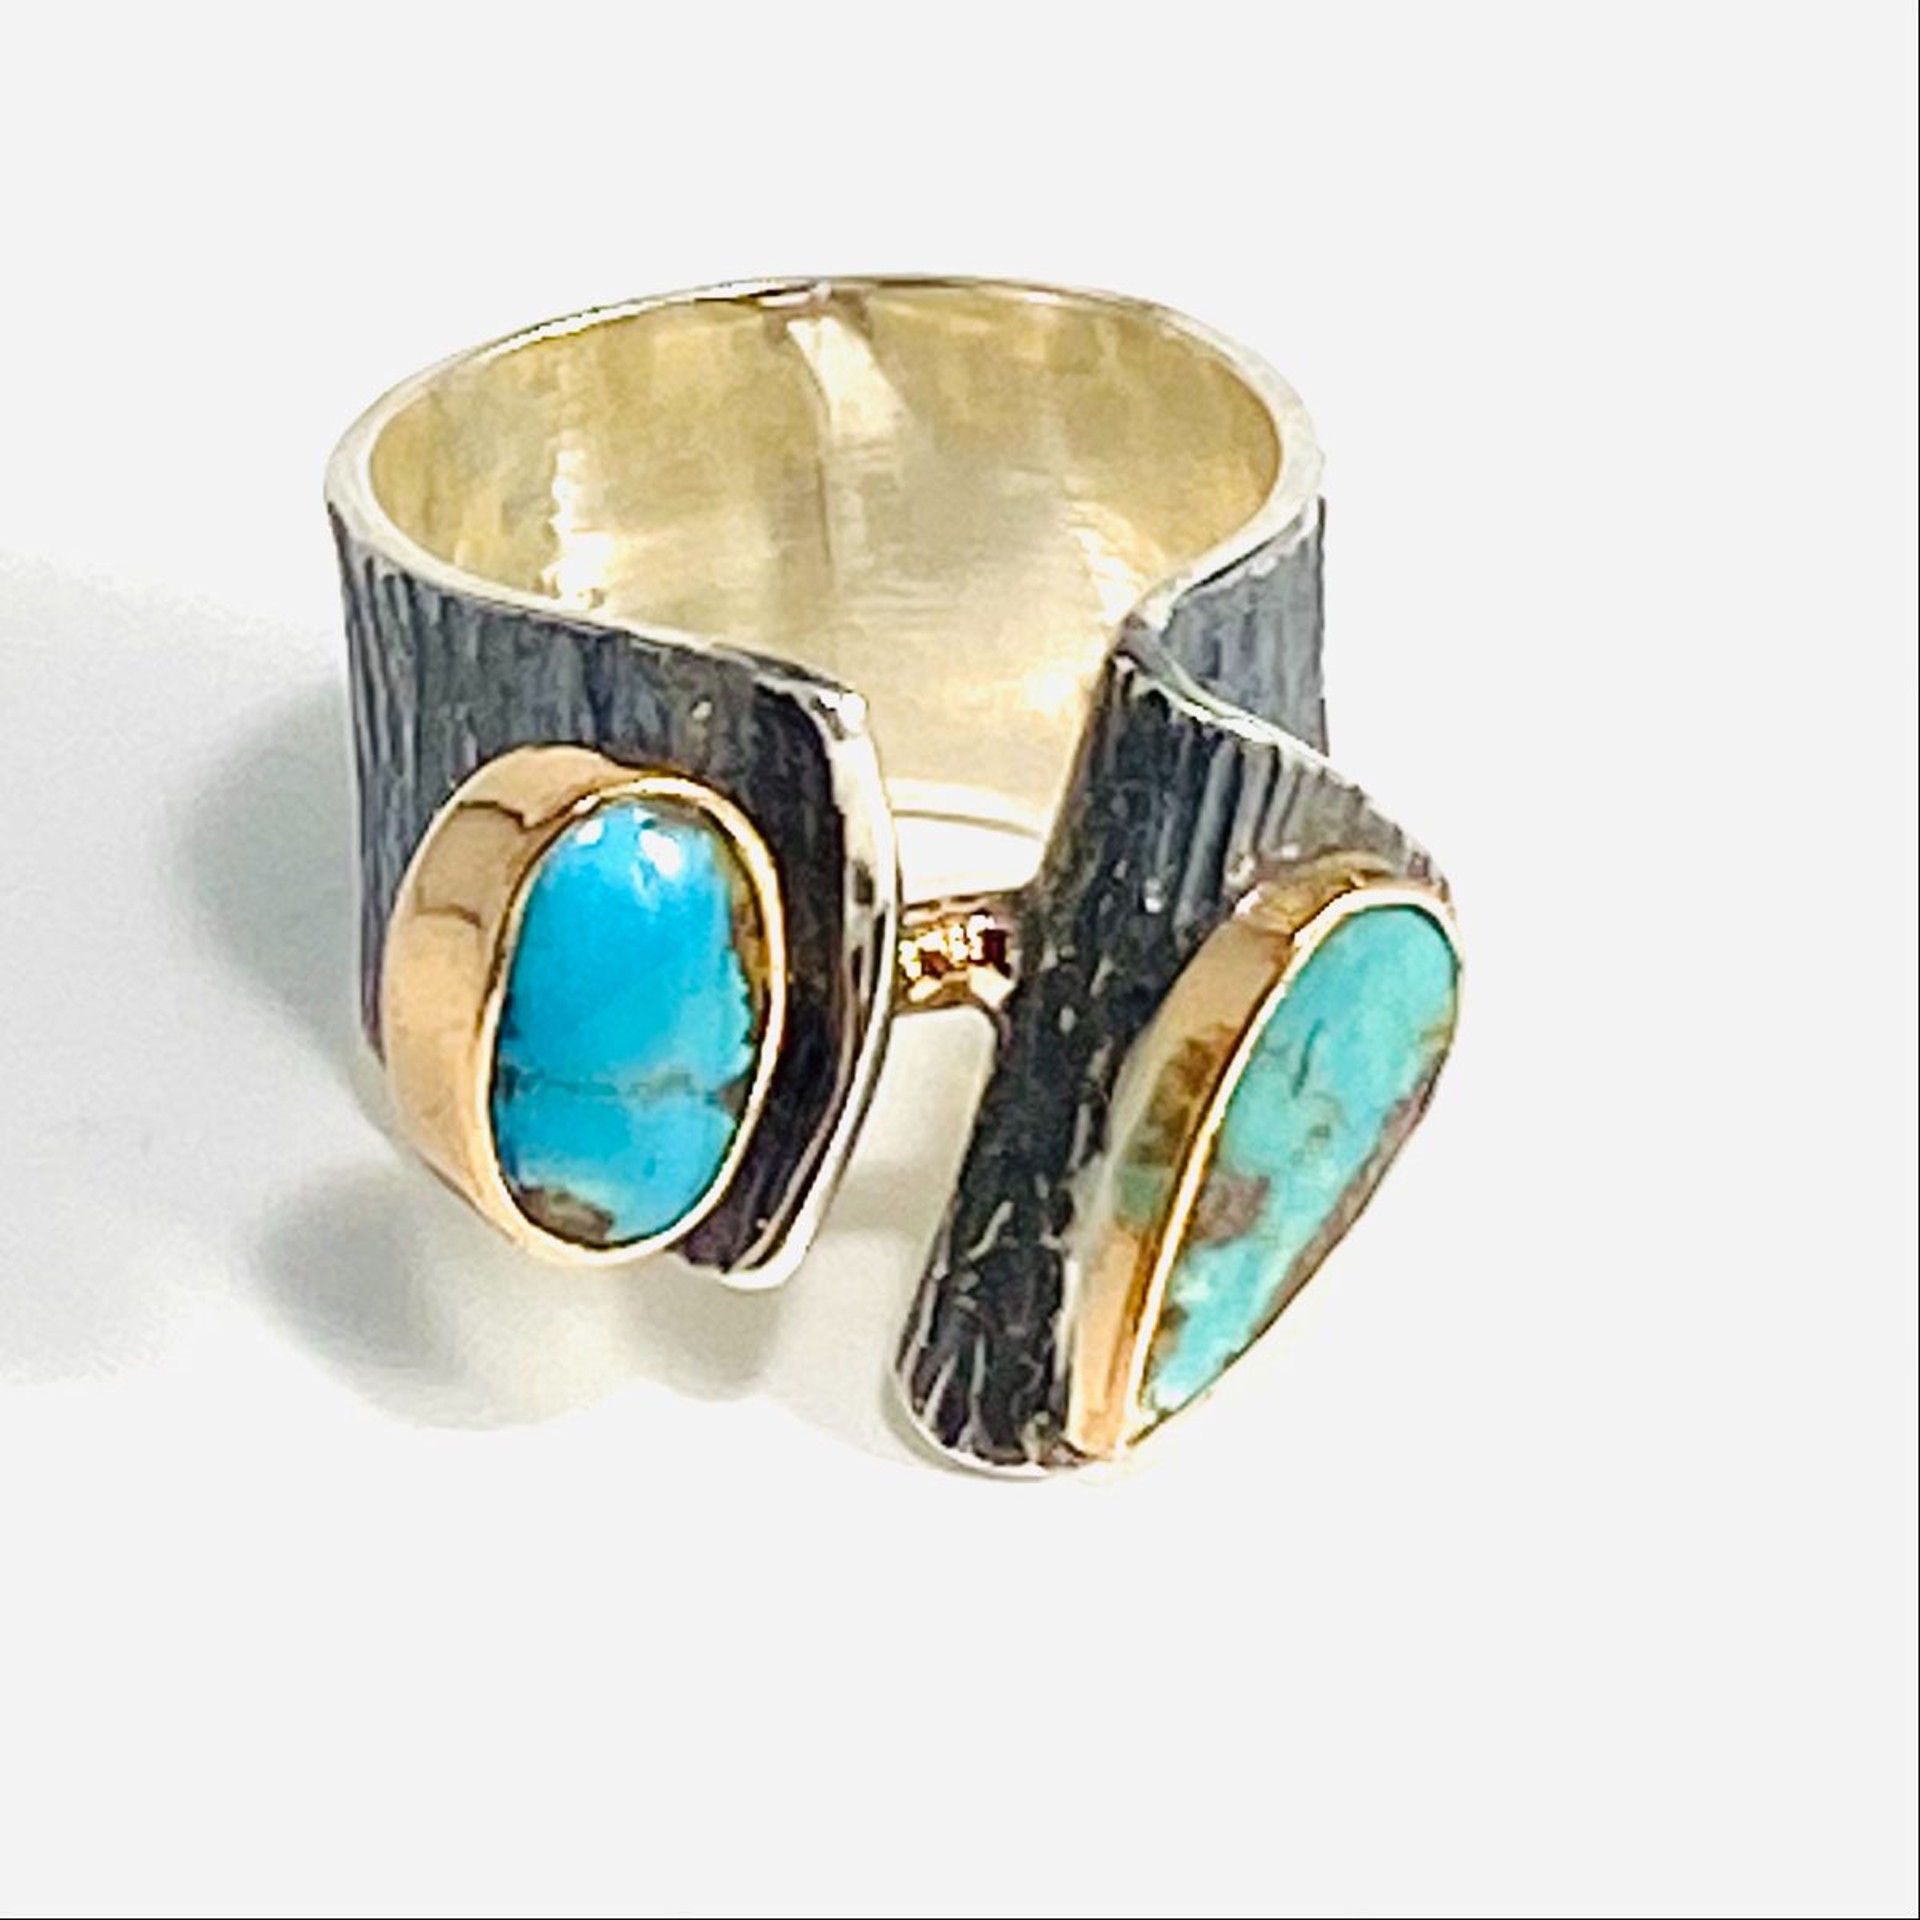 Persian Turquoise Oxidized Textured Band Ring sz9.25 BORA22-18 by Bora